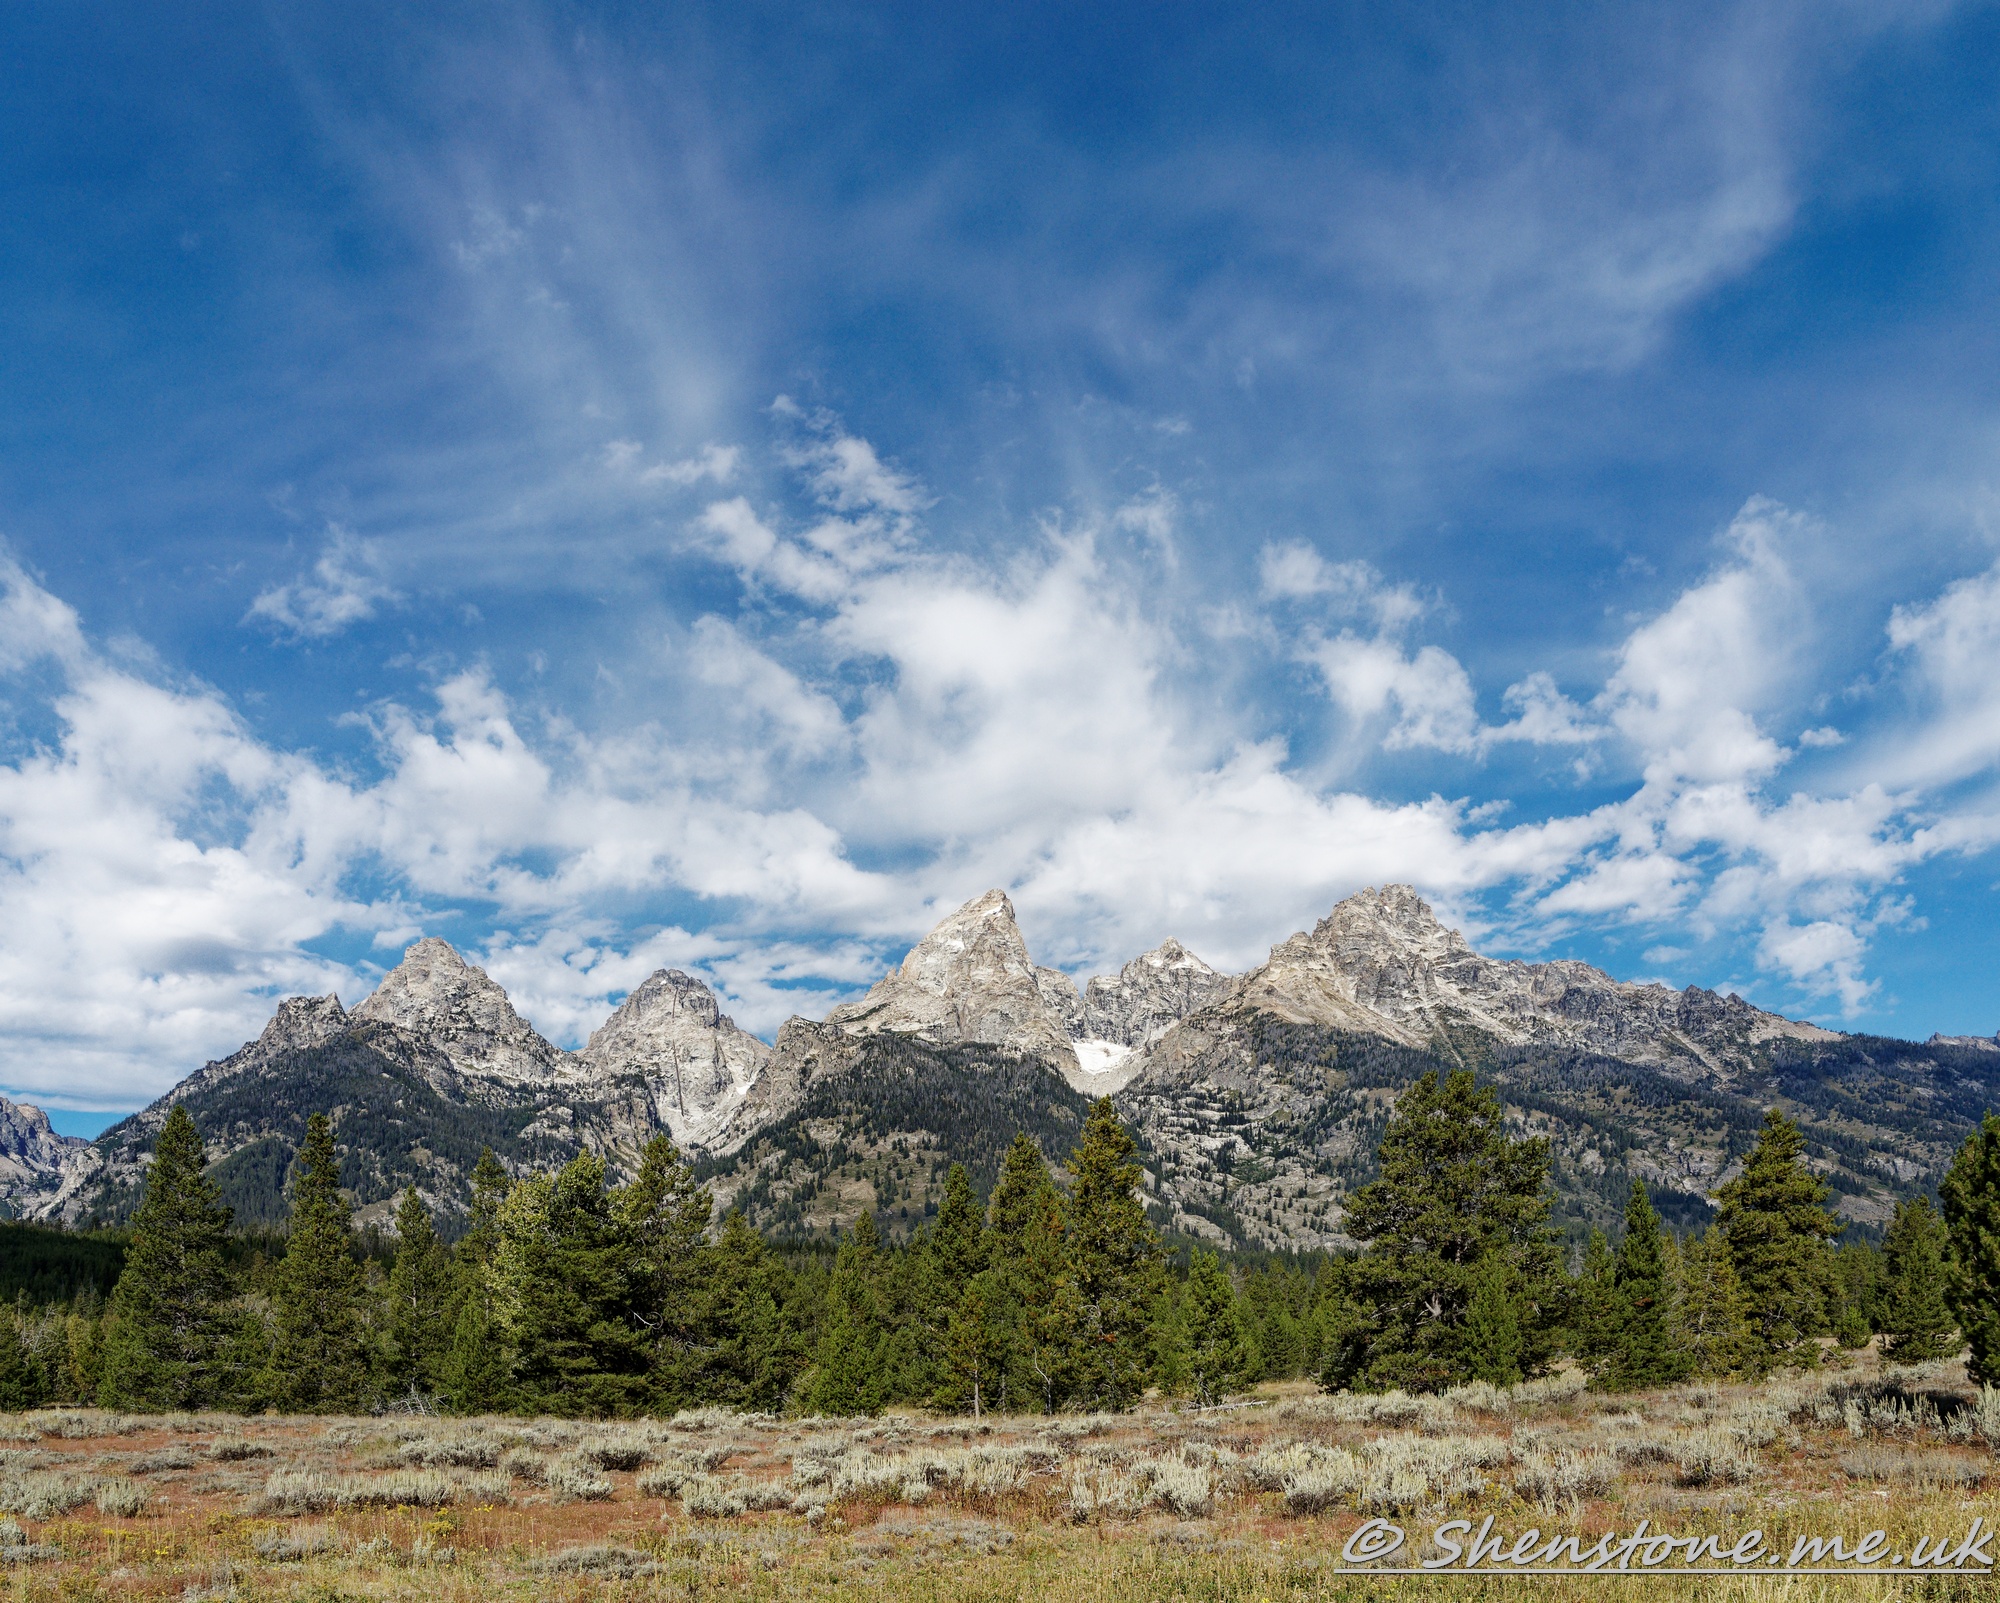 Teton National Park and Range, Wyoming, USA